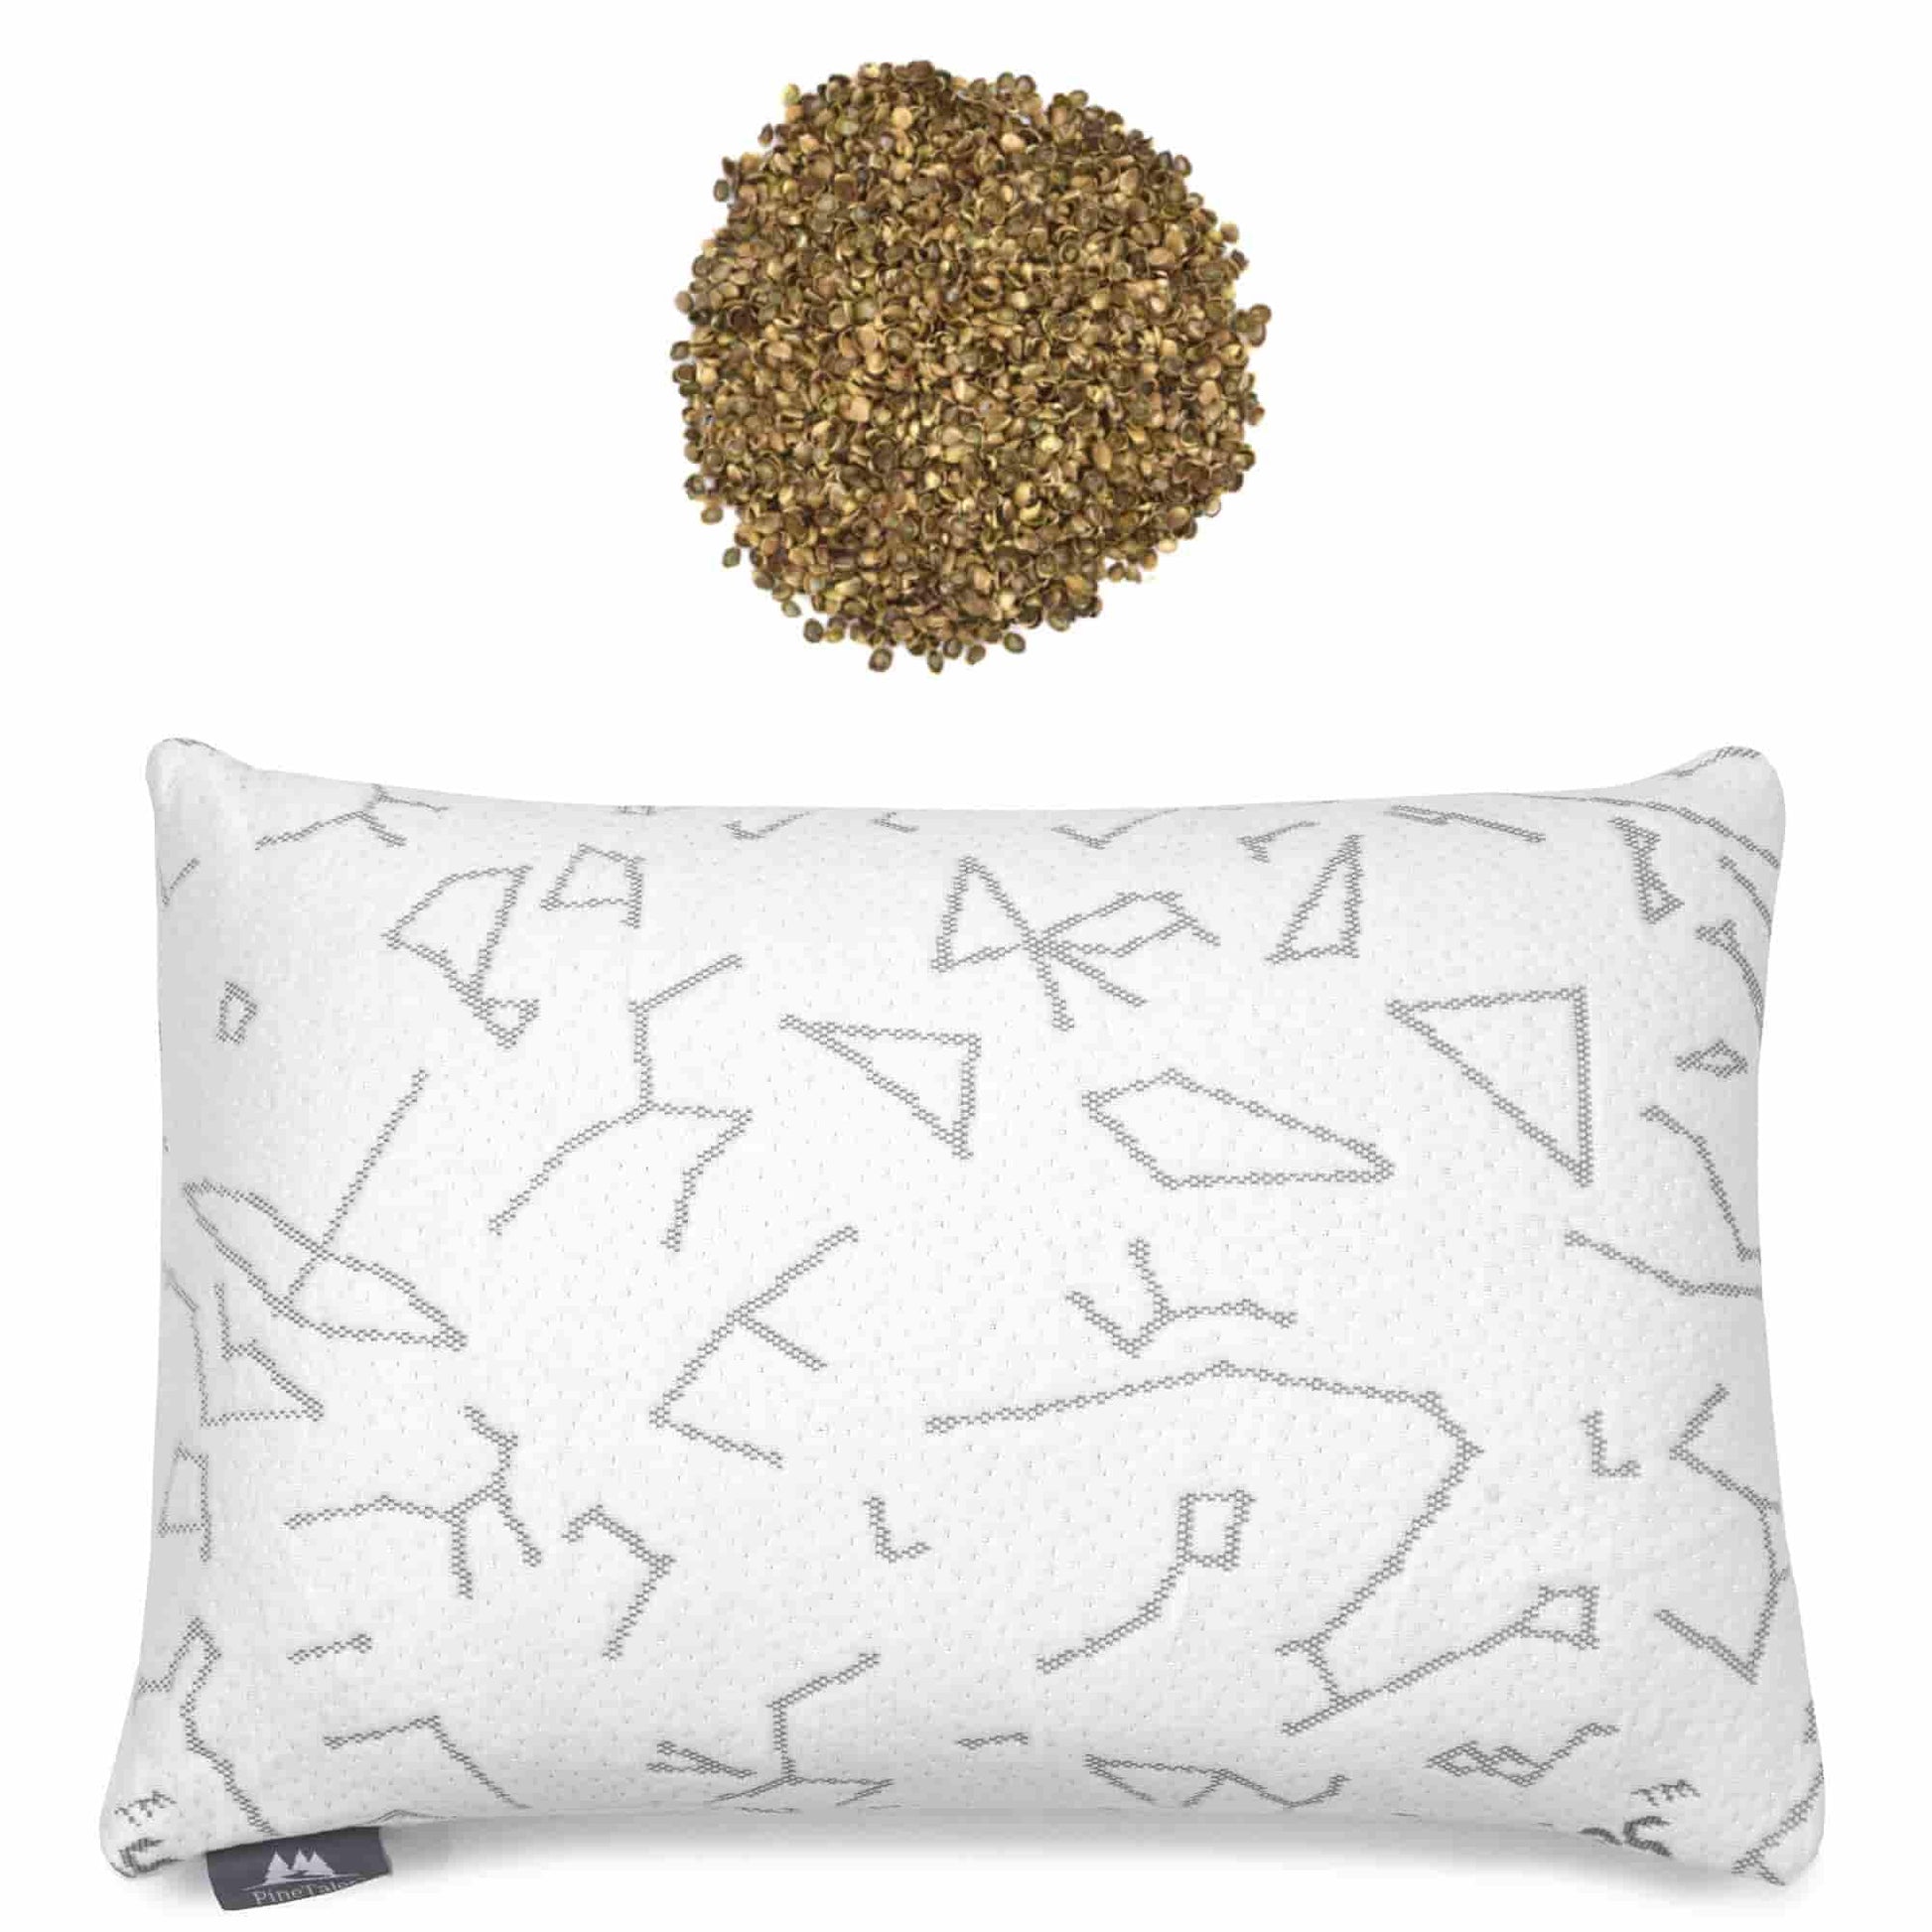 Hemp Pillow - PineTales - Star Constellation Design